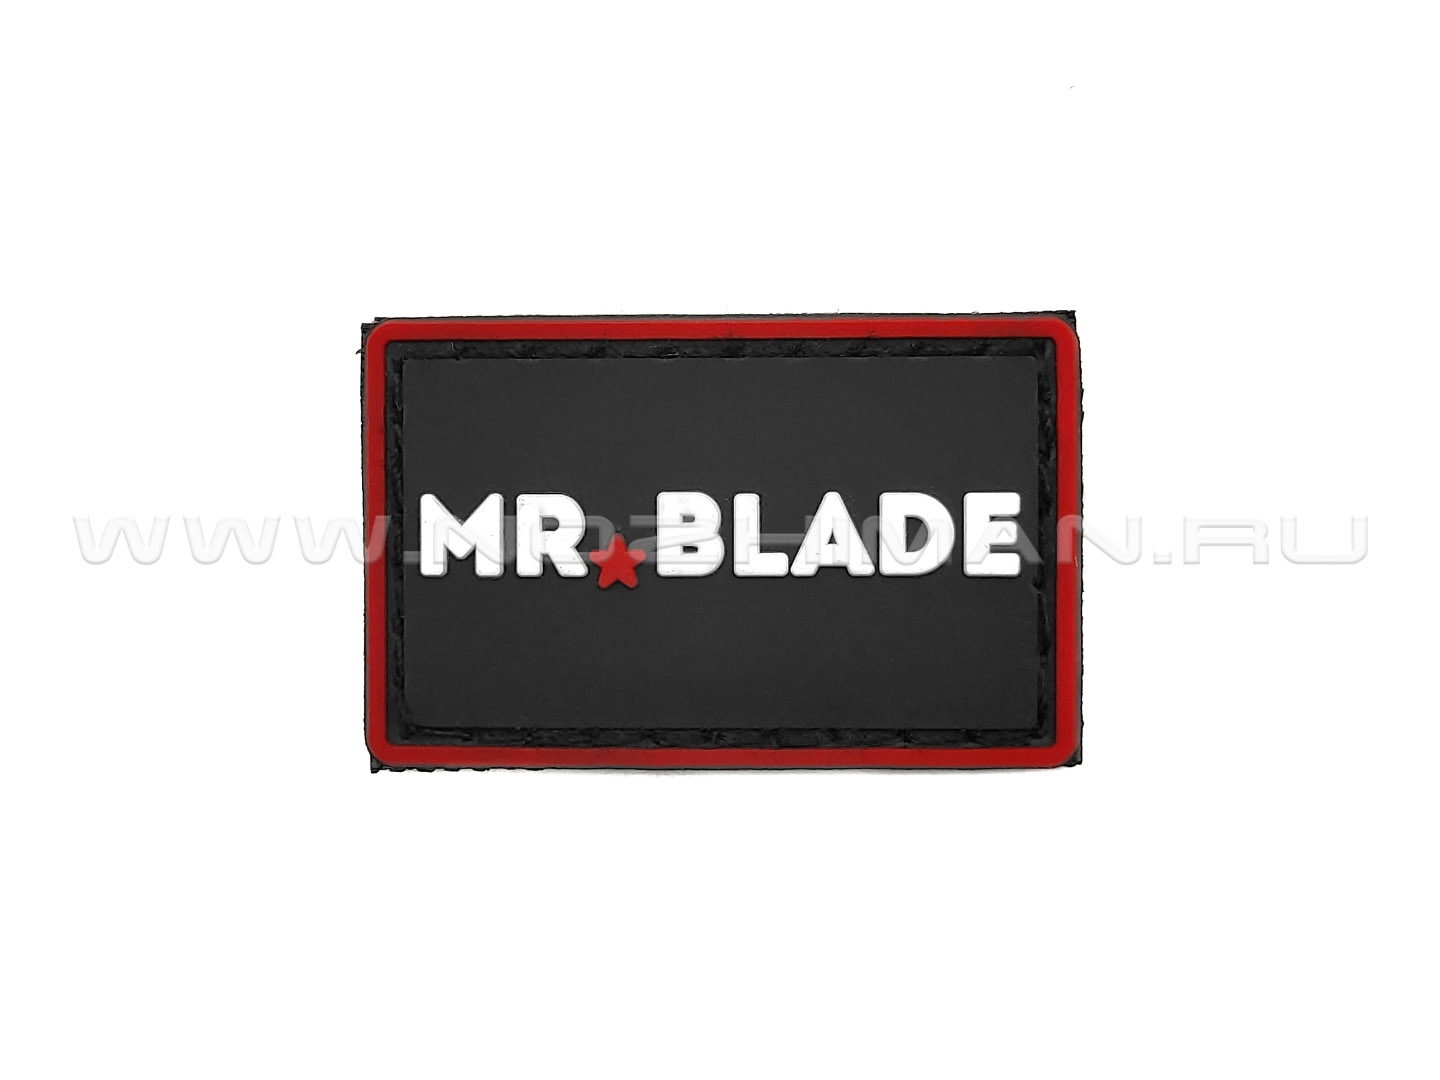 Патч П-517 "Mr.Blade Logo 40x25" пвх